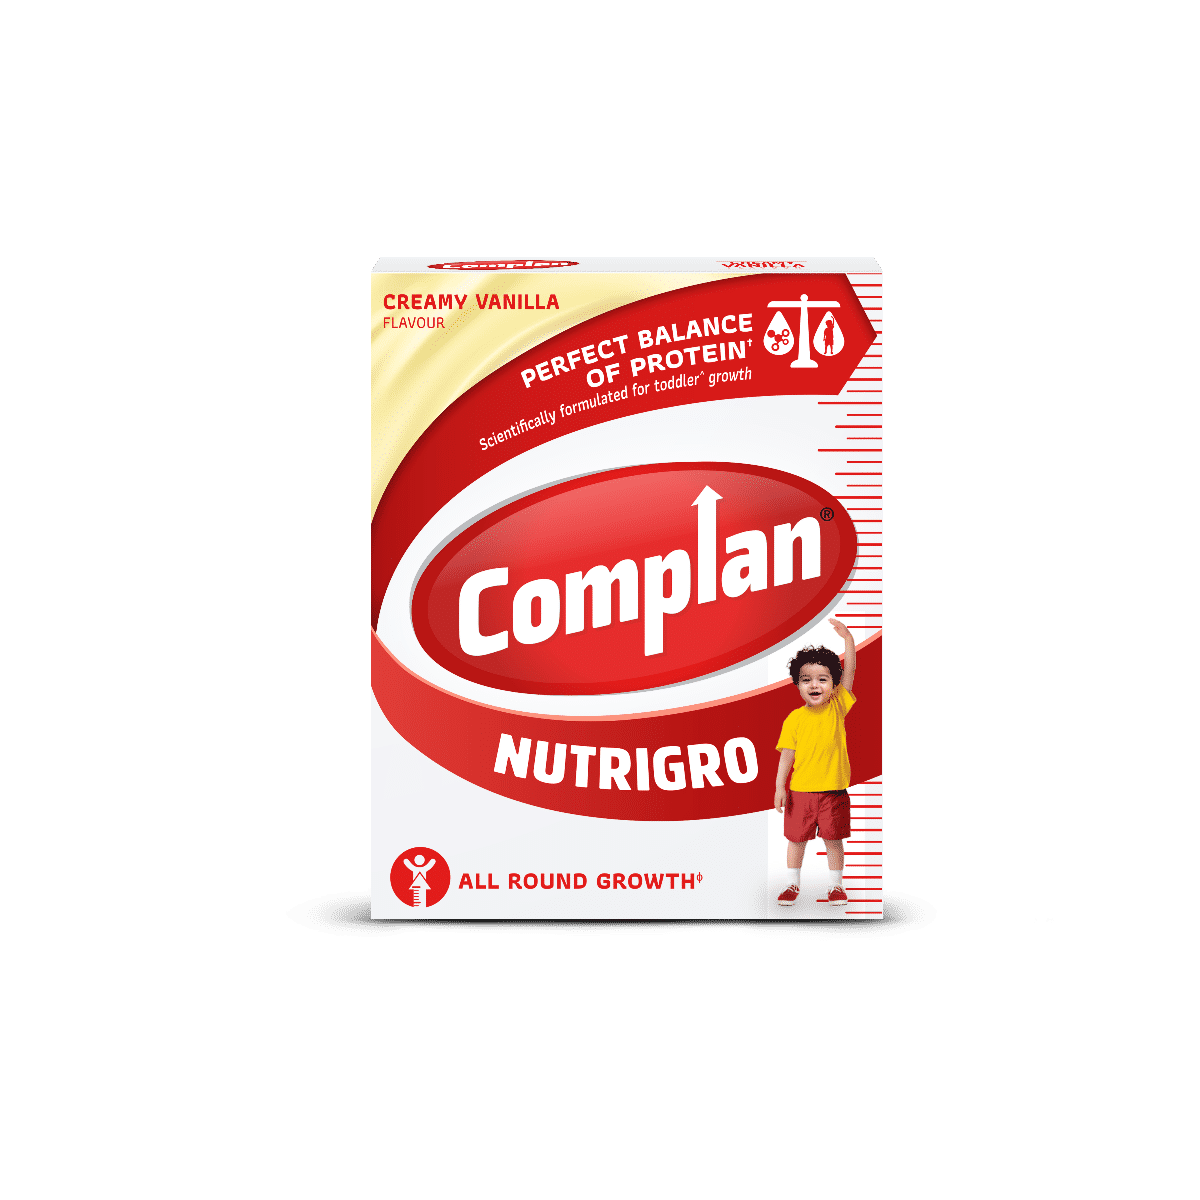 Buy Complan Nutrigro Creamy Vanilla Flavoured Health & Nutrition Drink, 200 gm Refill Pack Online